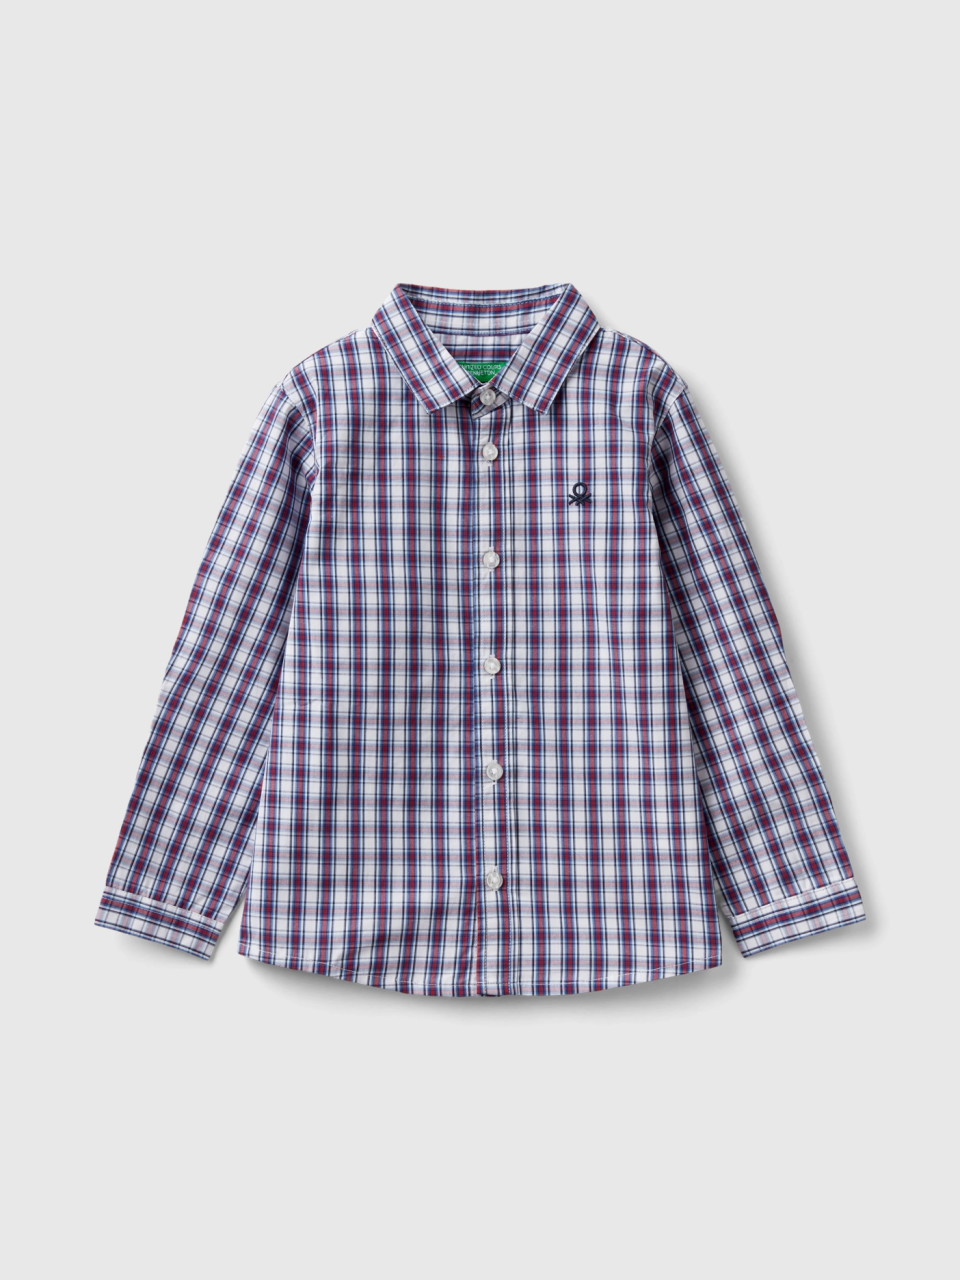 Benetton, Shirt In Pure Cotton, Multi-color, Kids